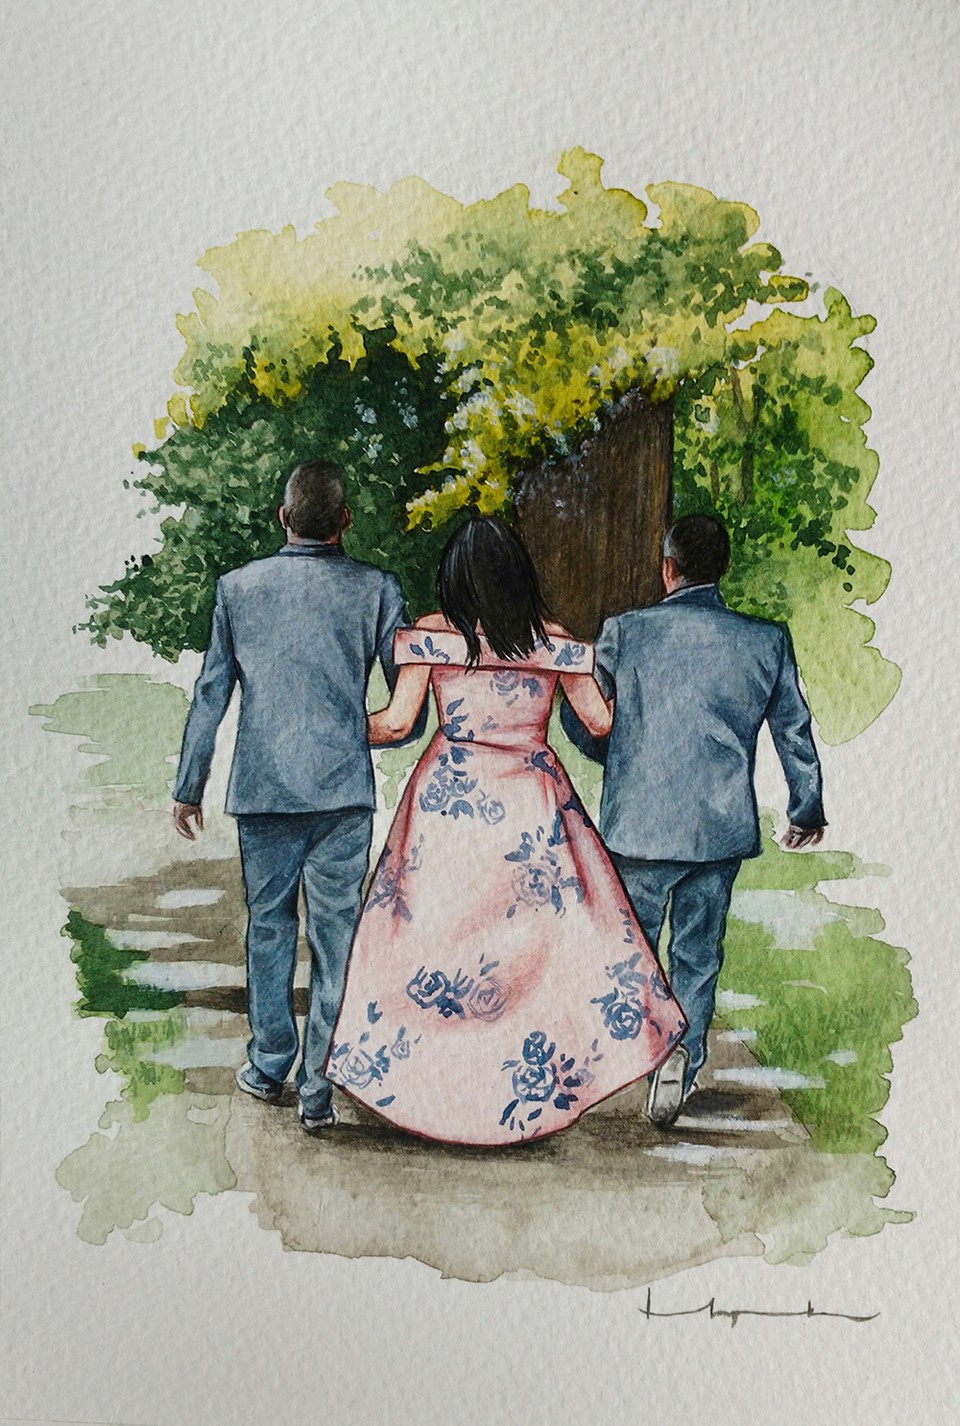 A family wedding portrait illustration by artist Holly Khraibani